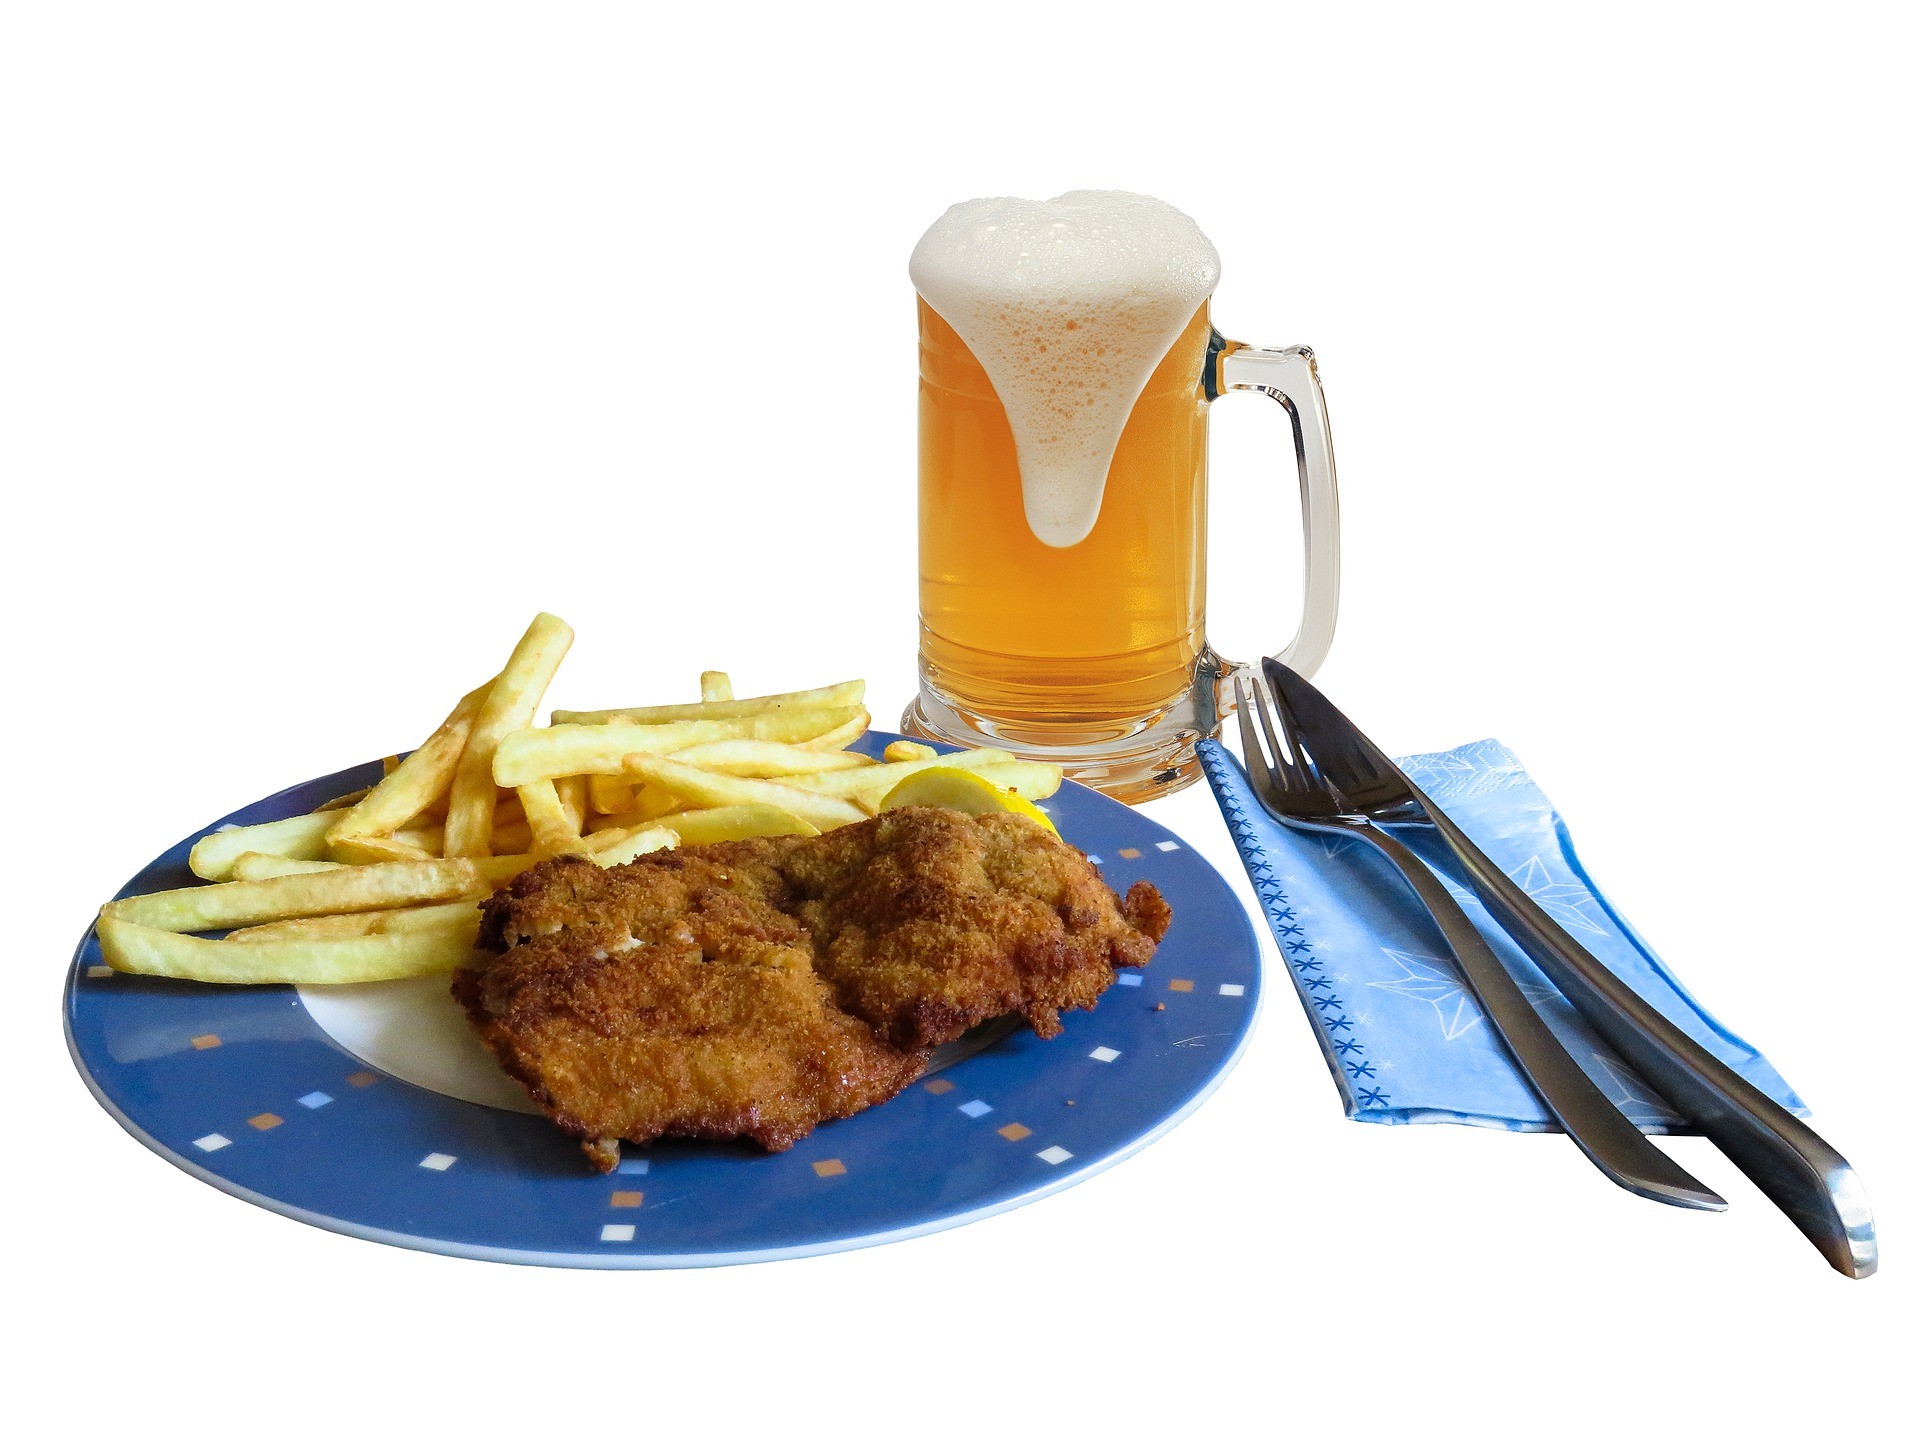 General 1920x1440 food dishes fork table knife napkin mug beer foam fries white background beer mugs alcohol